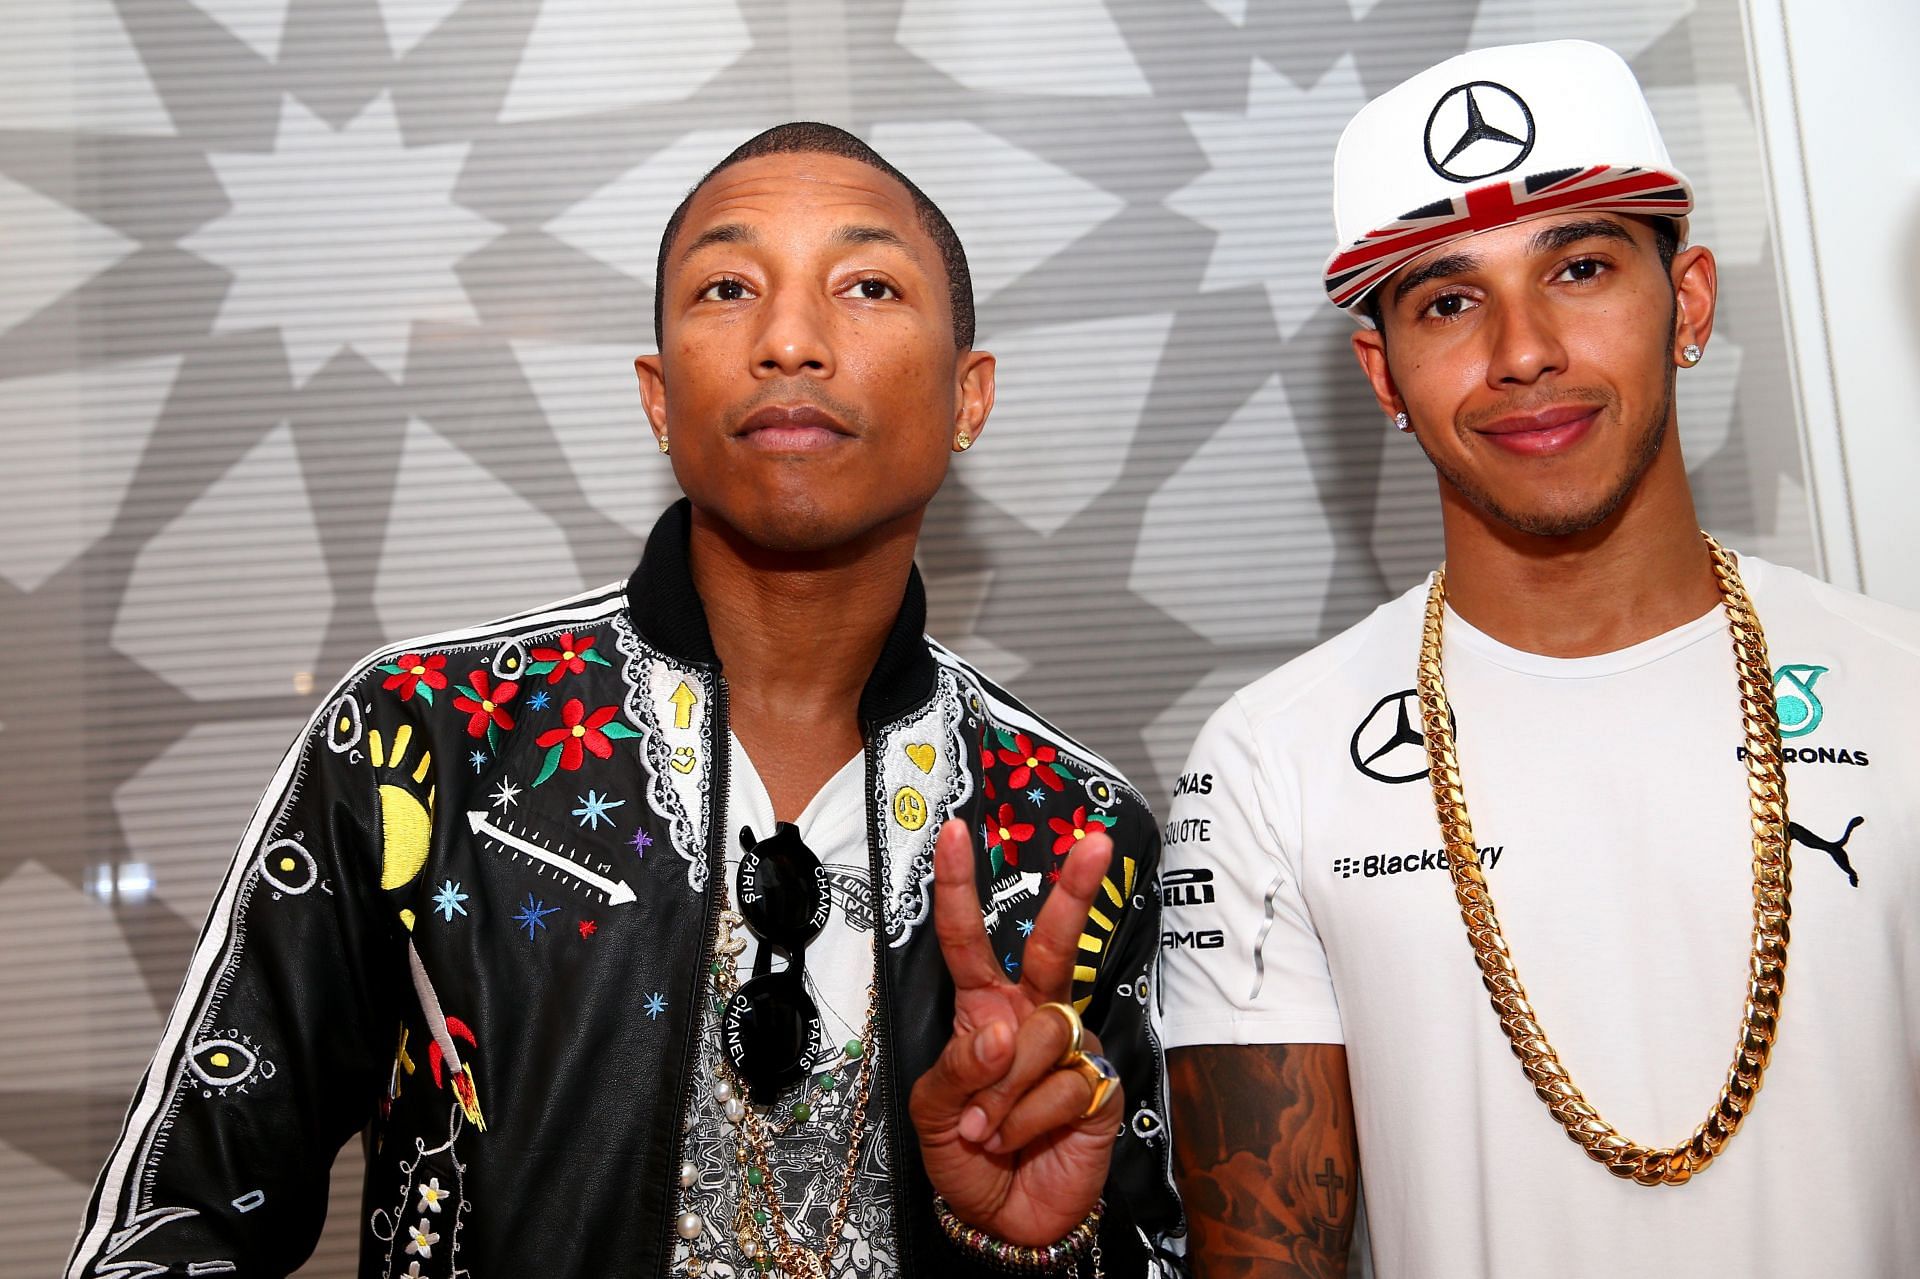 Lewis Hamilton (right) with Pharrell Williams during the 2021 Abu Dhabi Grand Prix